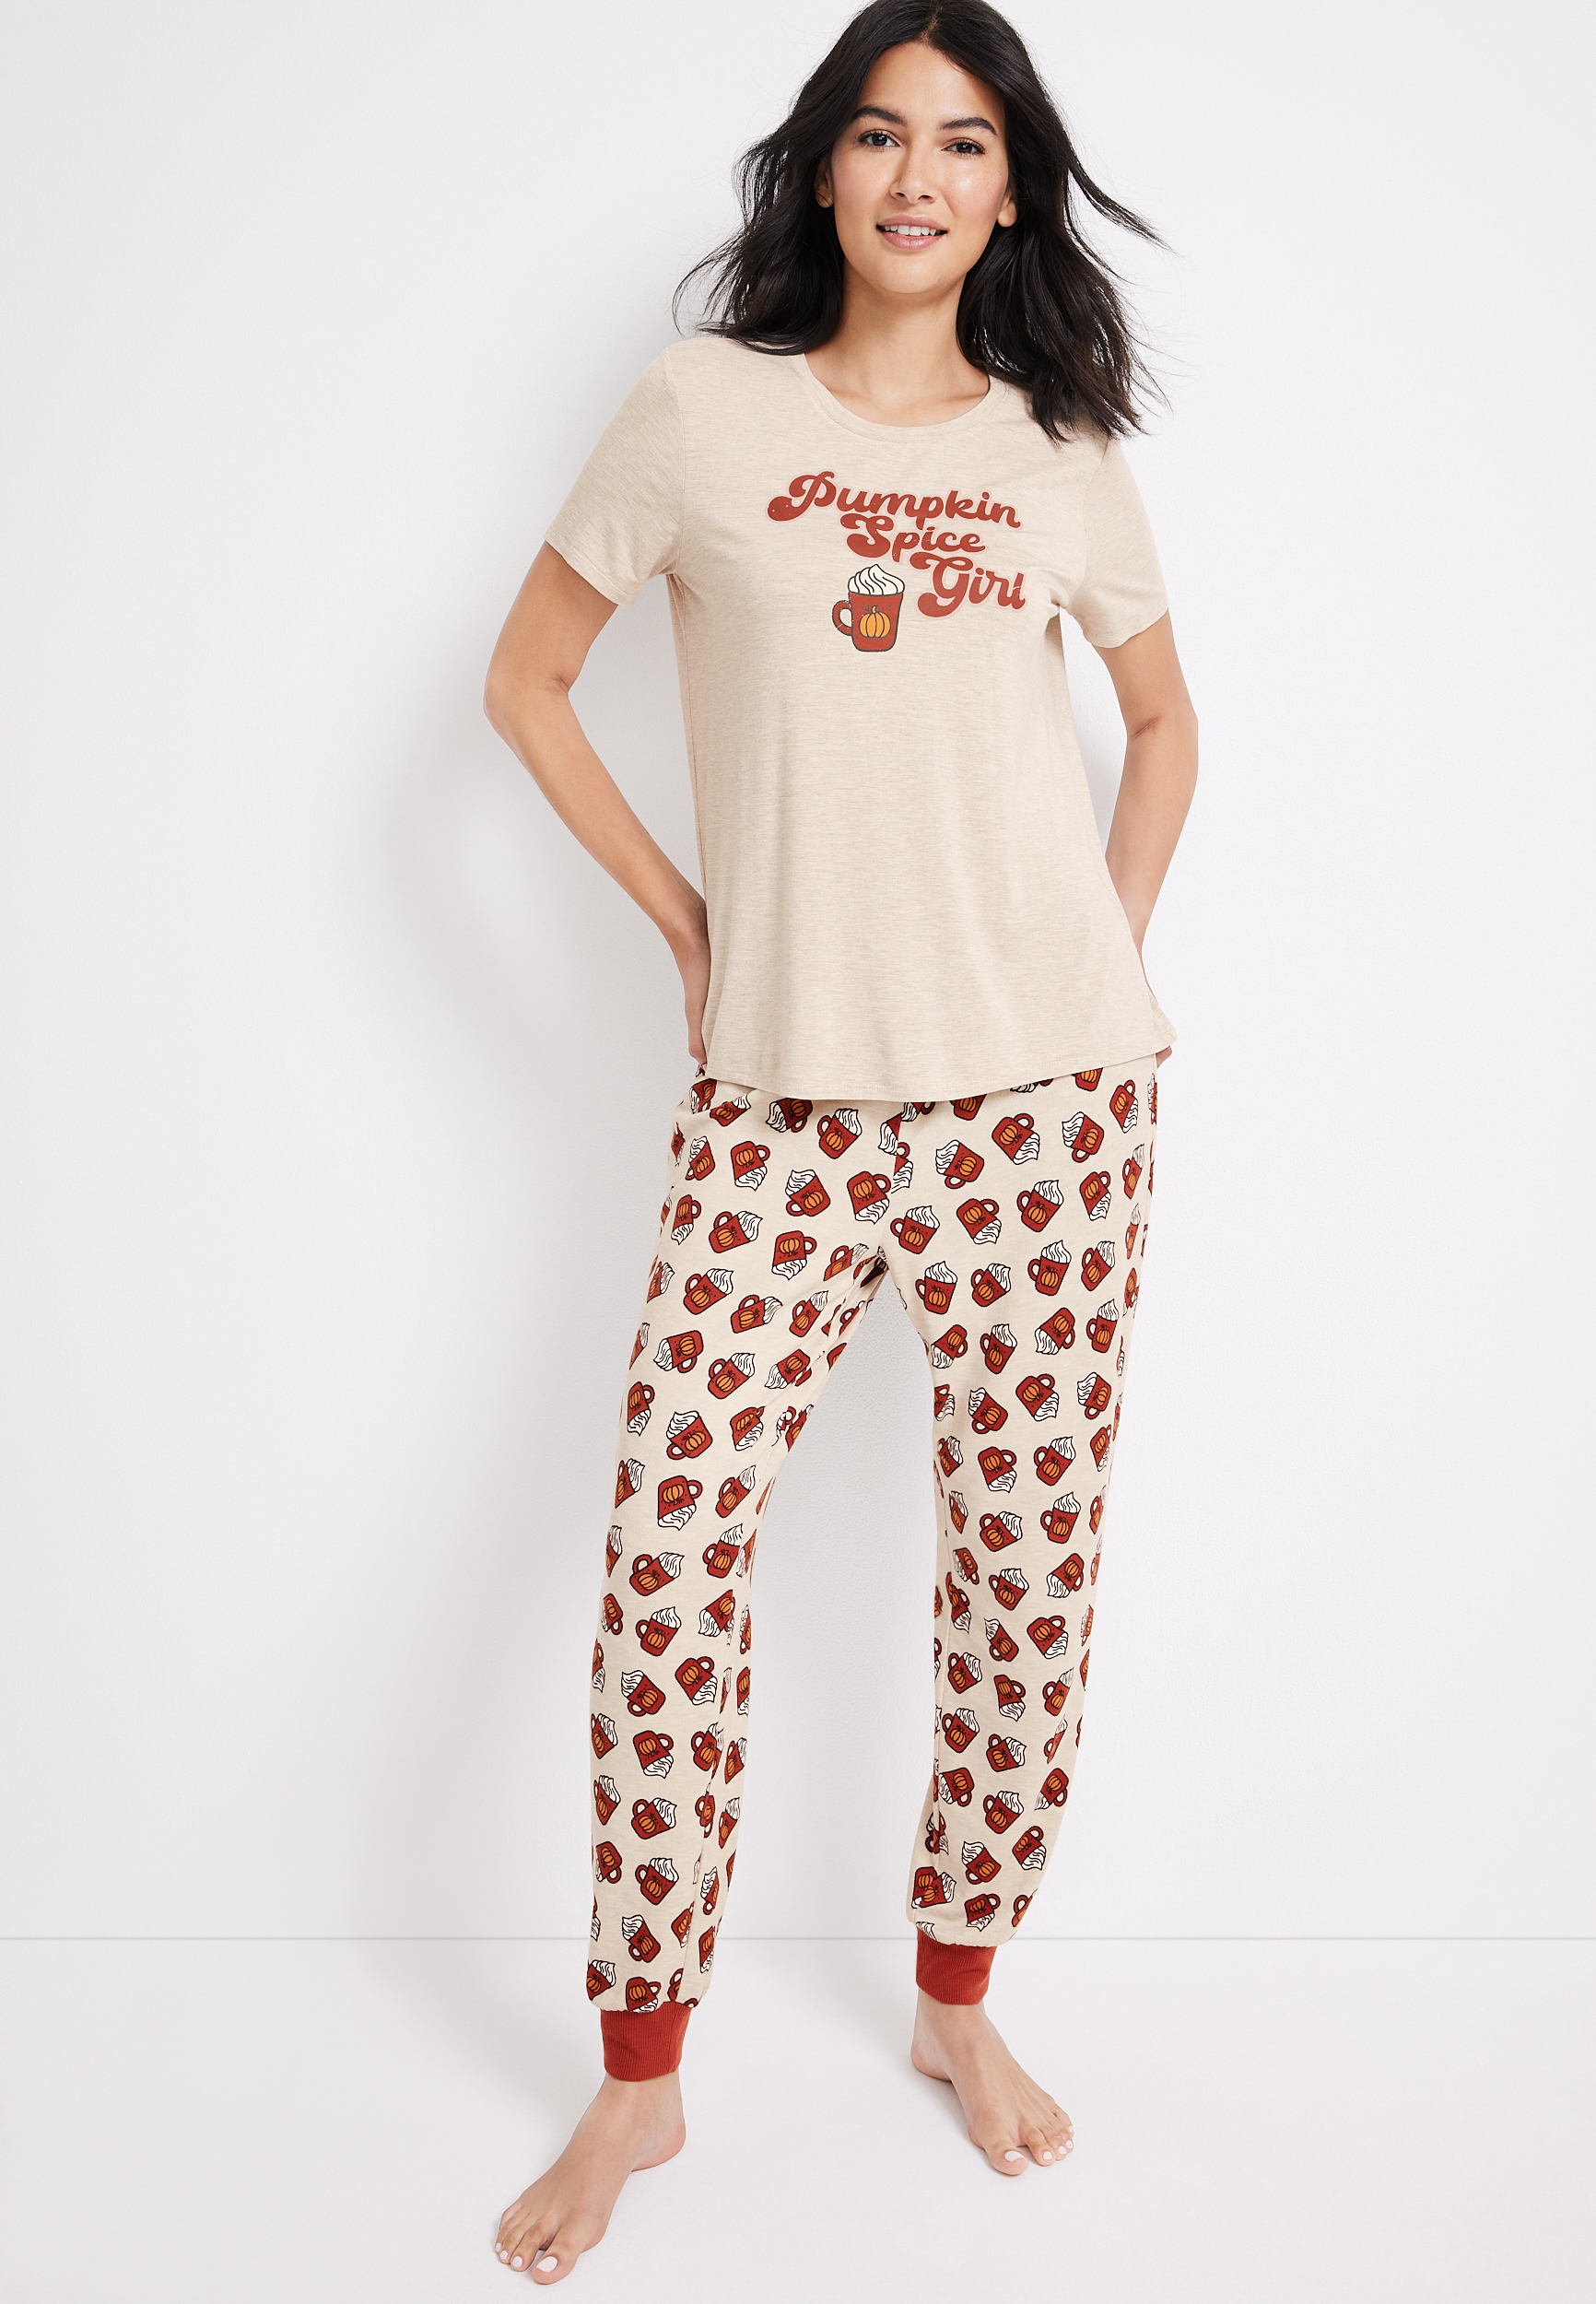 Cute And Comfy Pajamas And Sleepwear